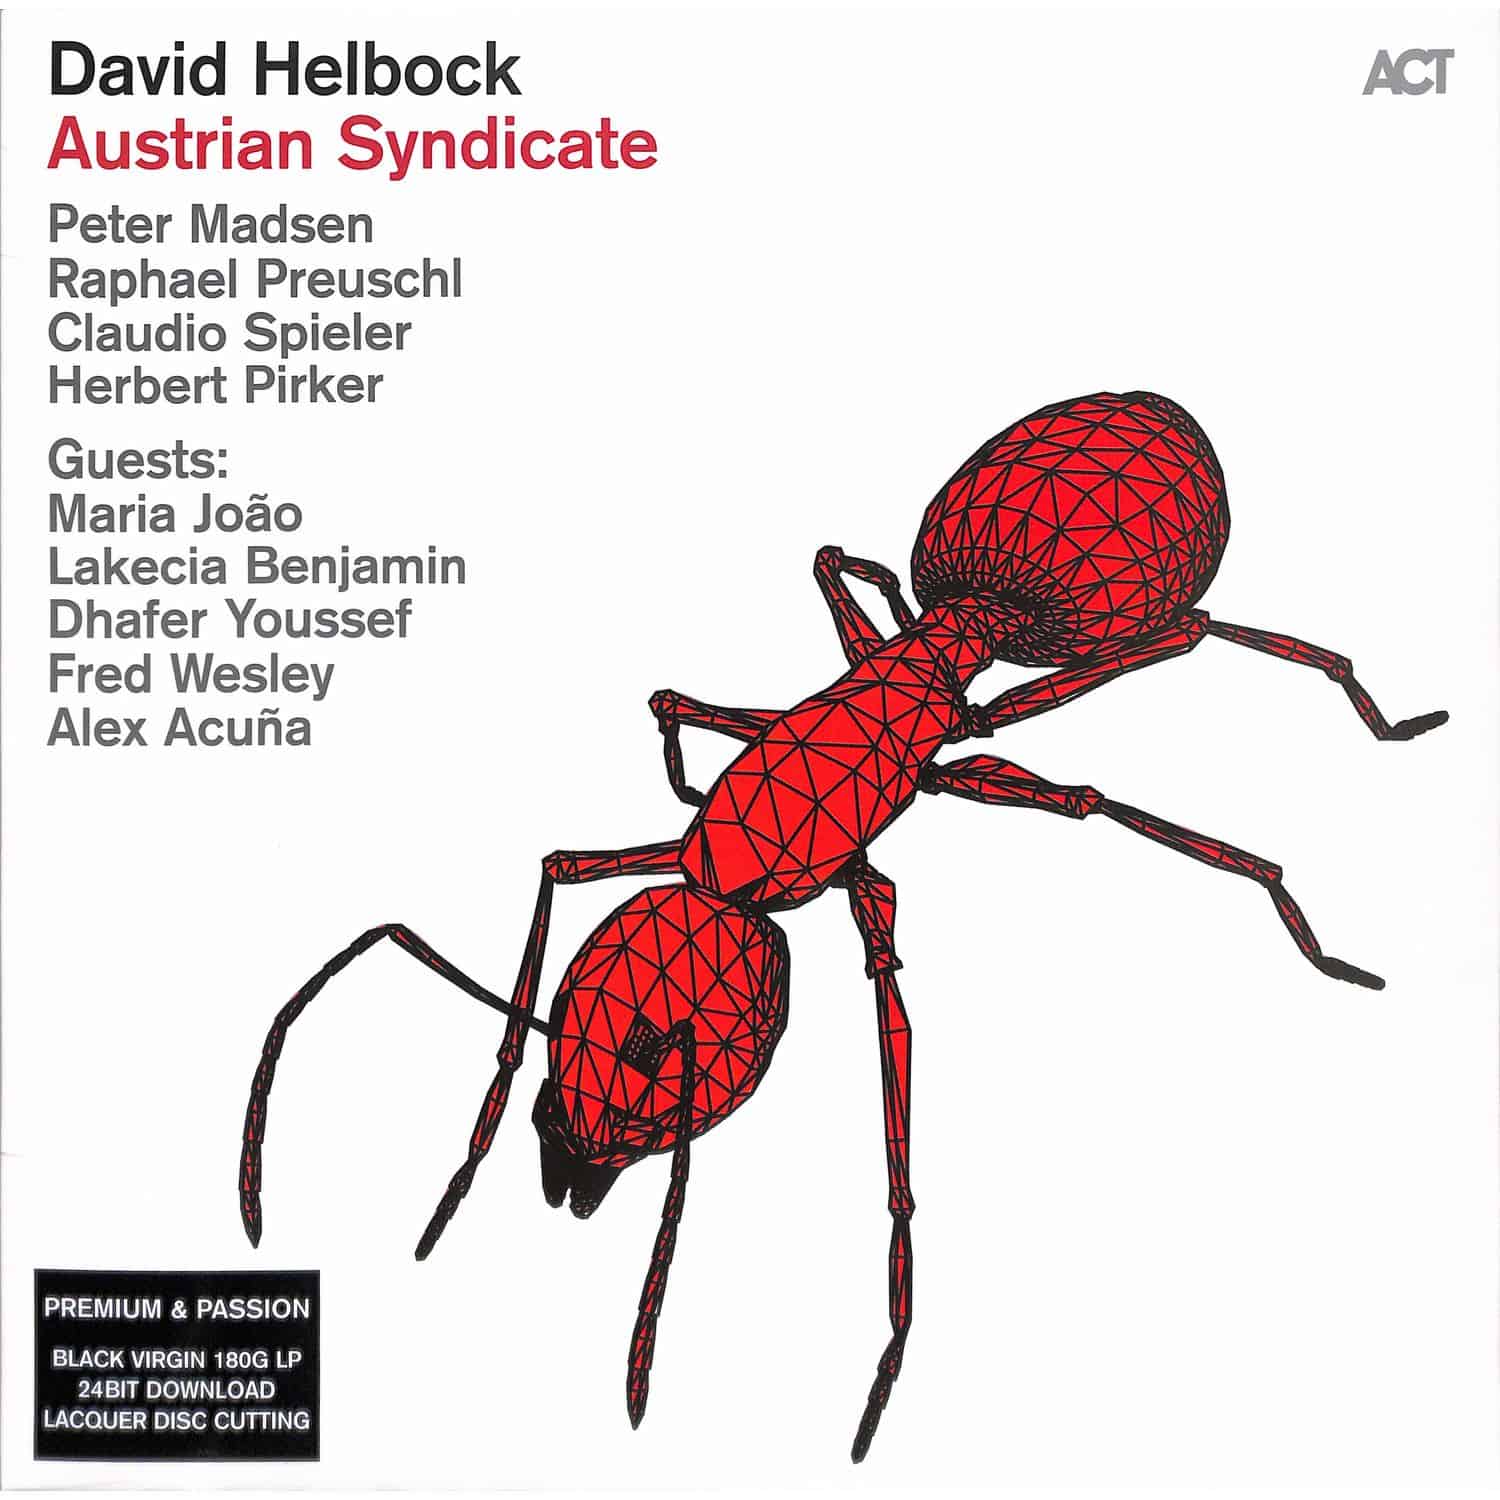  David Helbock - AUSTRIAN SYNDICATE 